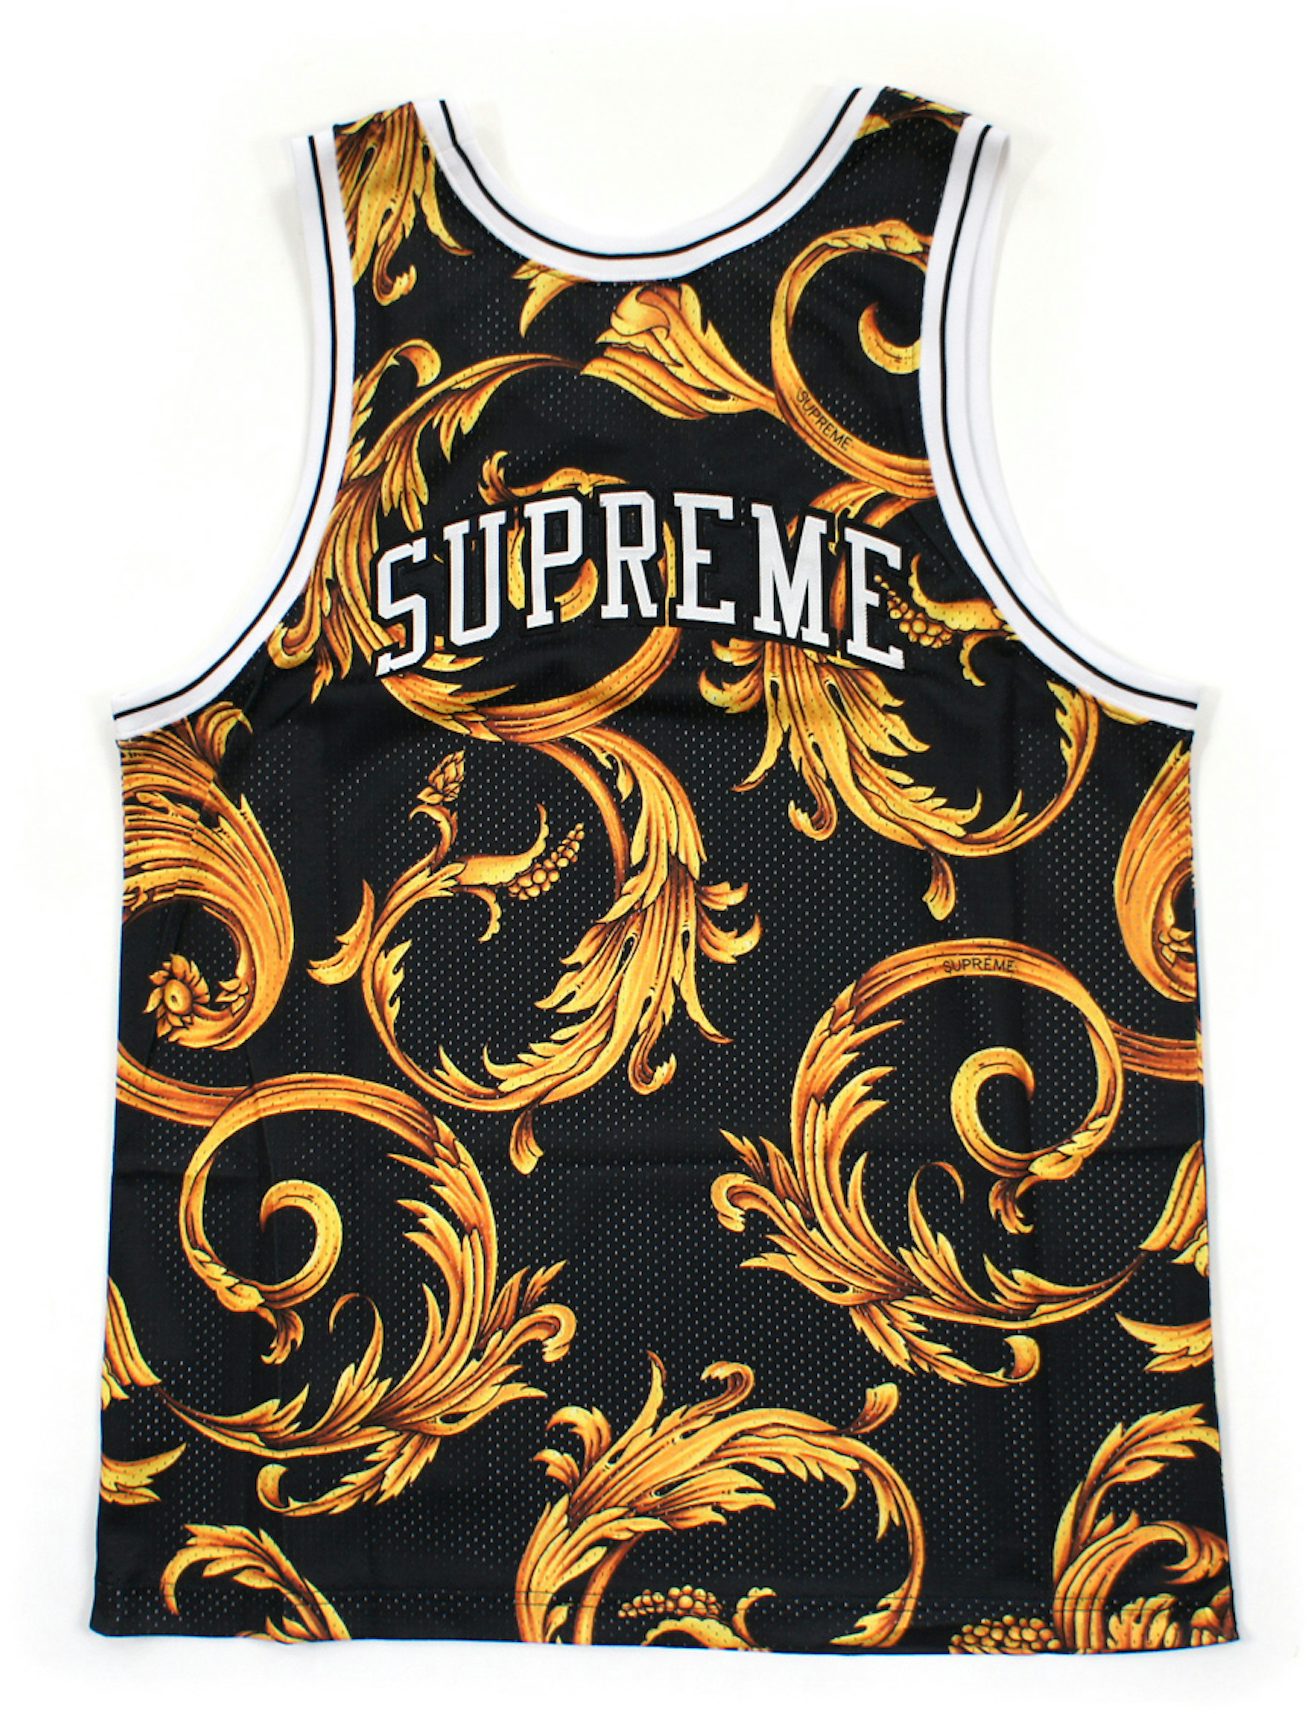 Nike Supreme Basketball Jersey M Black Gold Tee Shirt Jacket Dunk